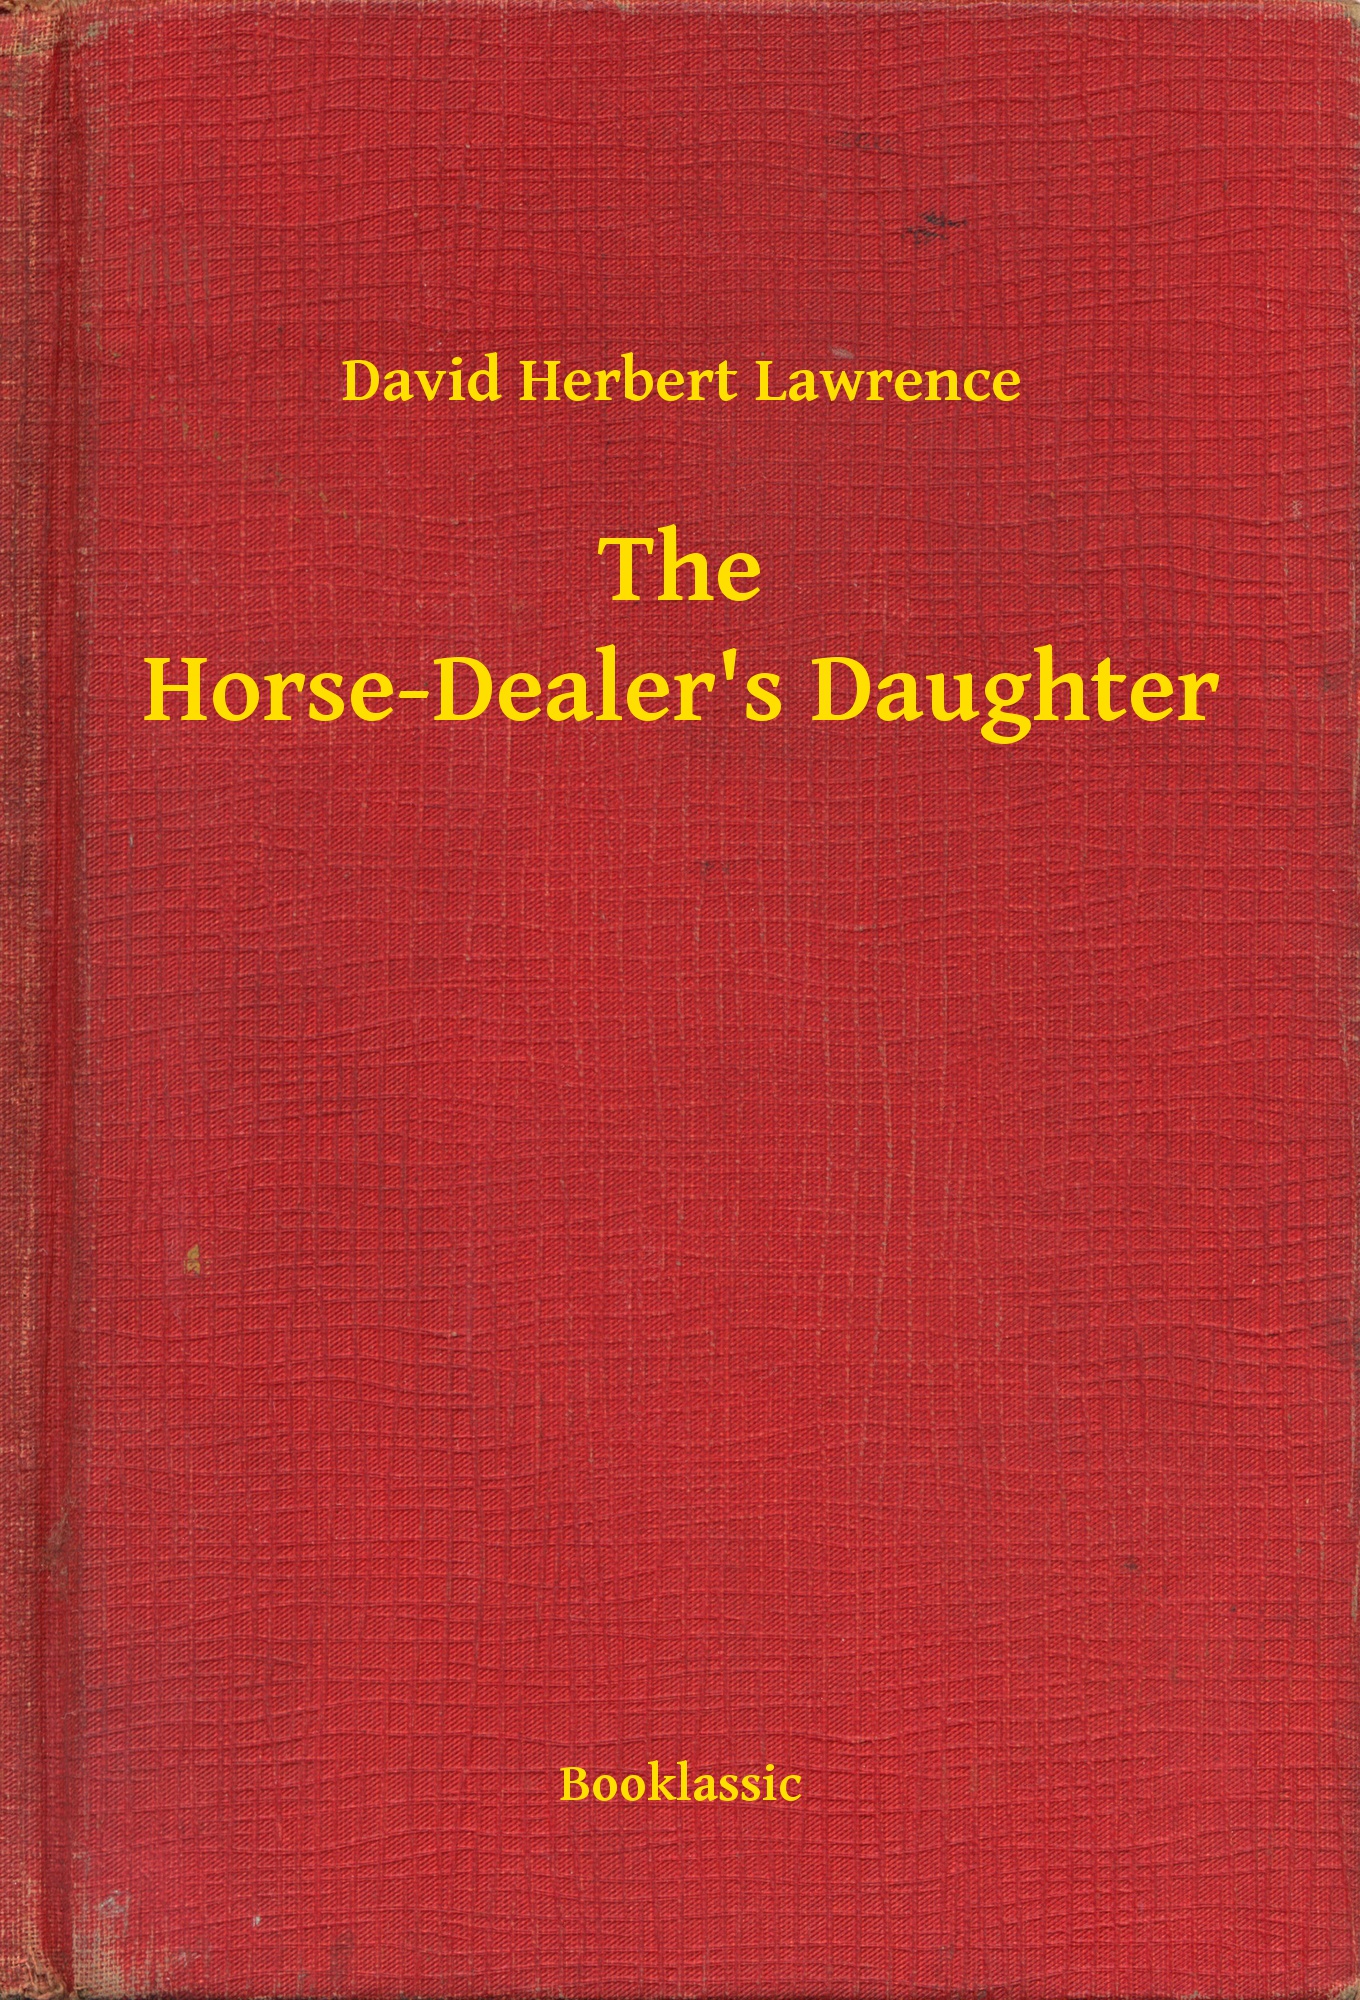 The Horse-Dealer"s Daughter